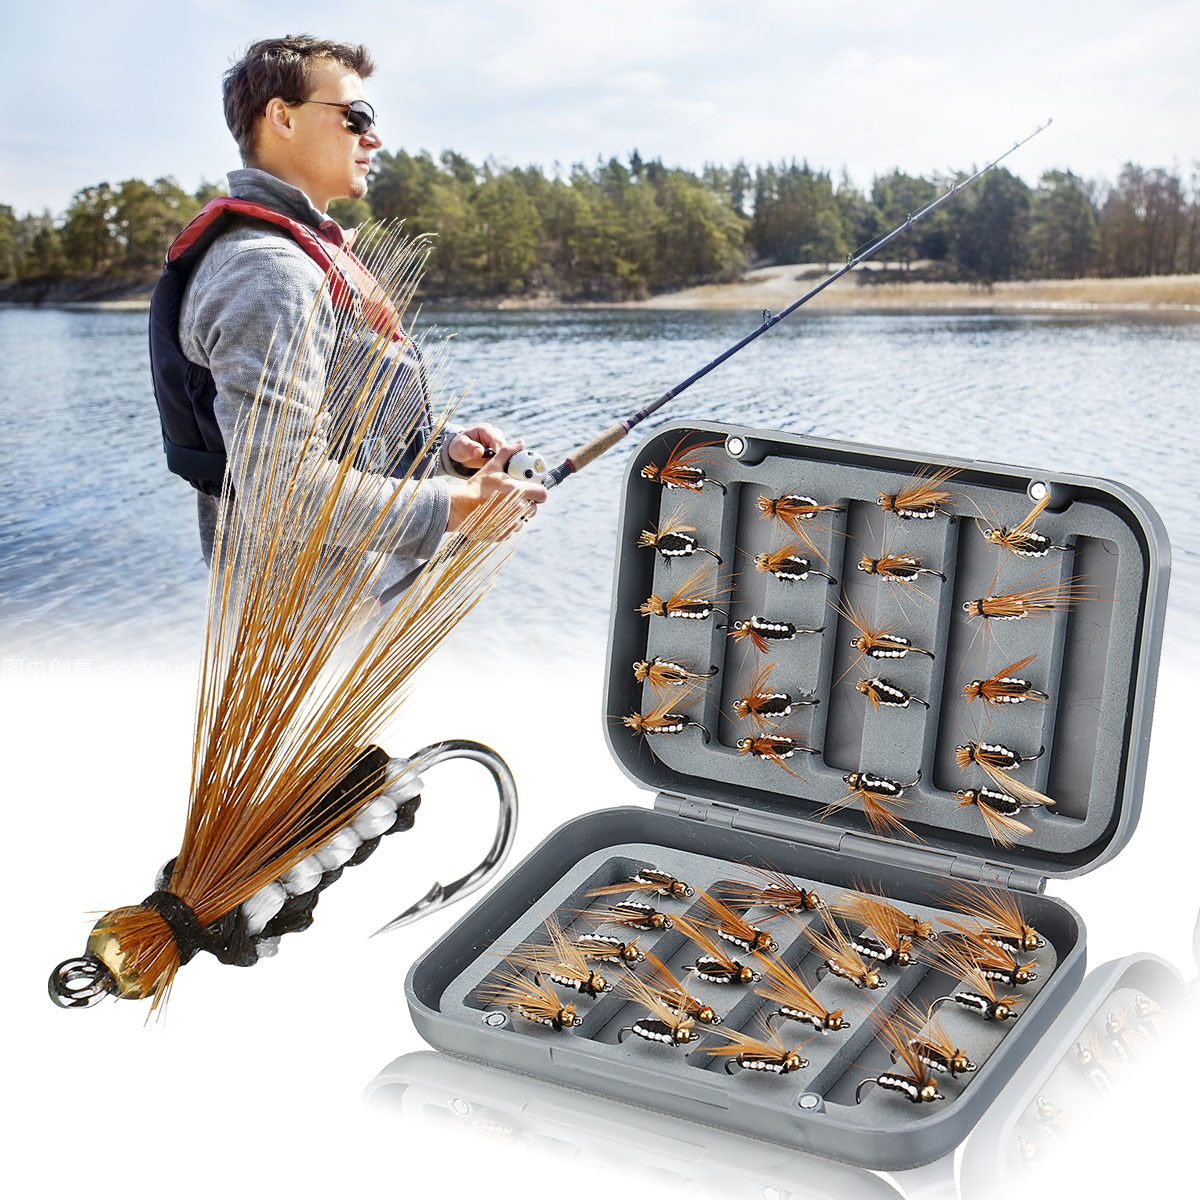 

ZANLURE 40 Pcs Flies Fishing Lure Portable Fishing Baits Tackle With Storage Box